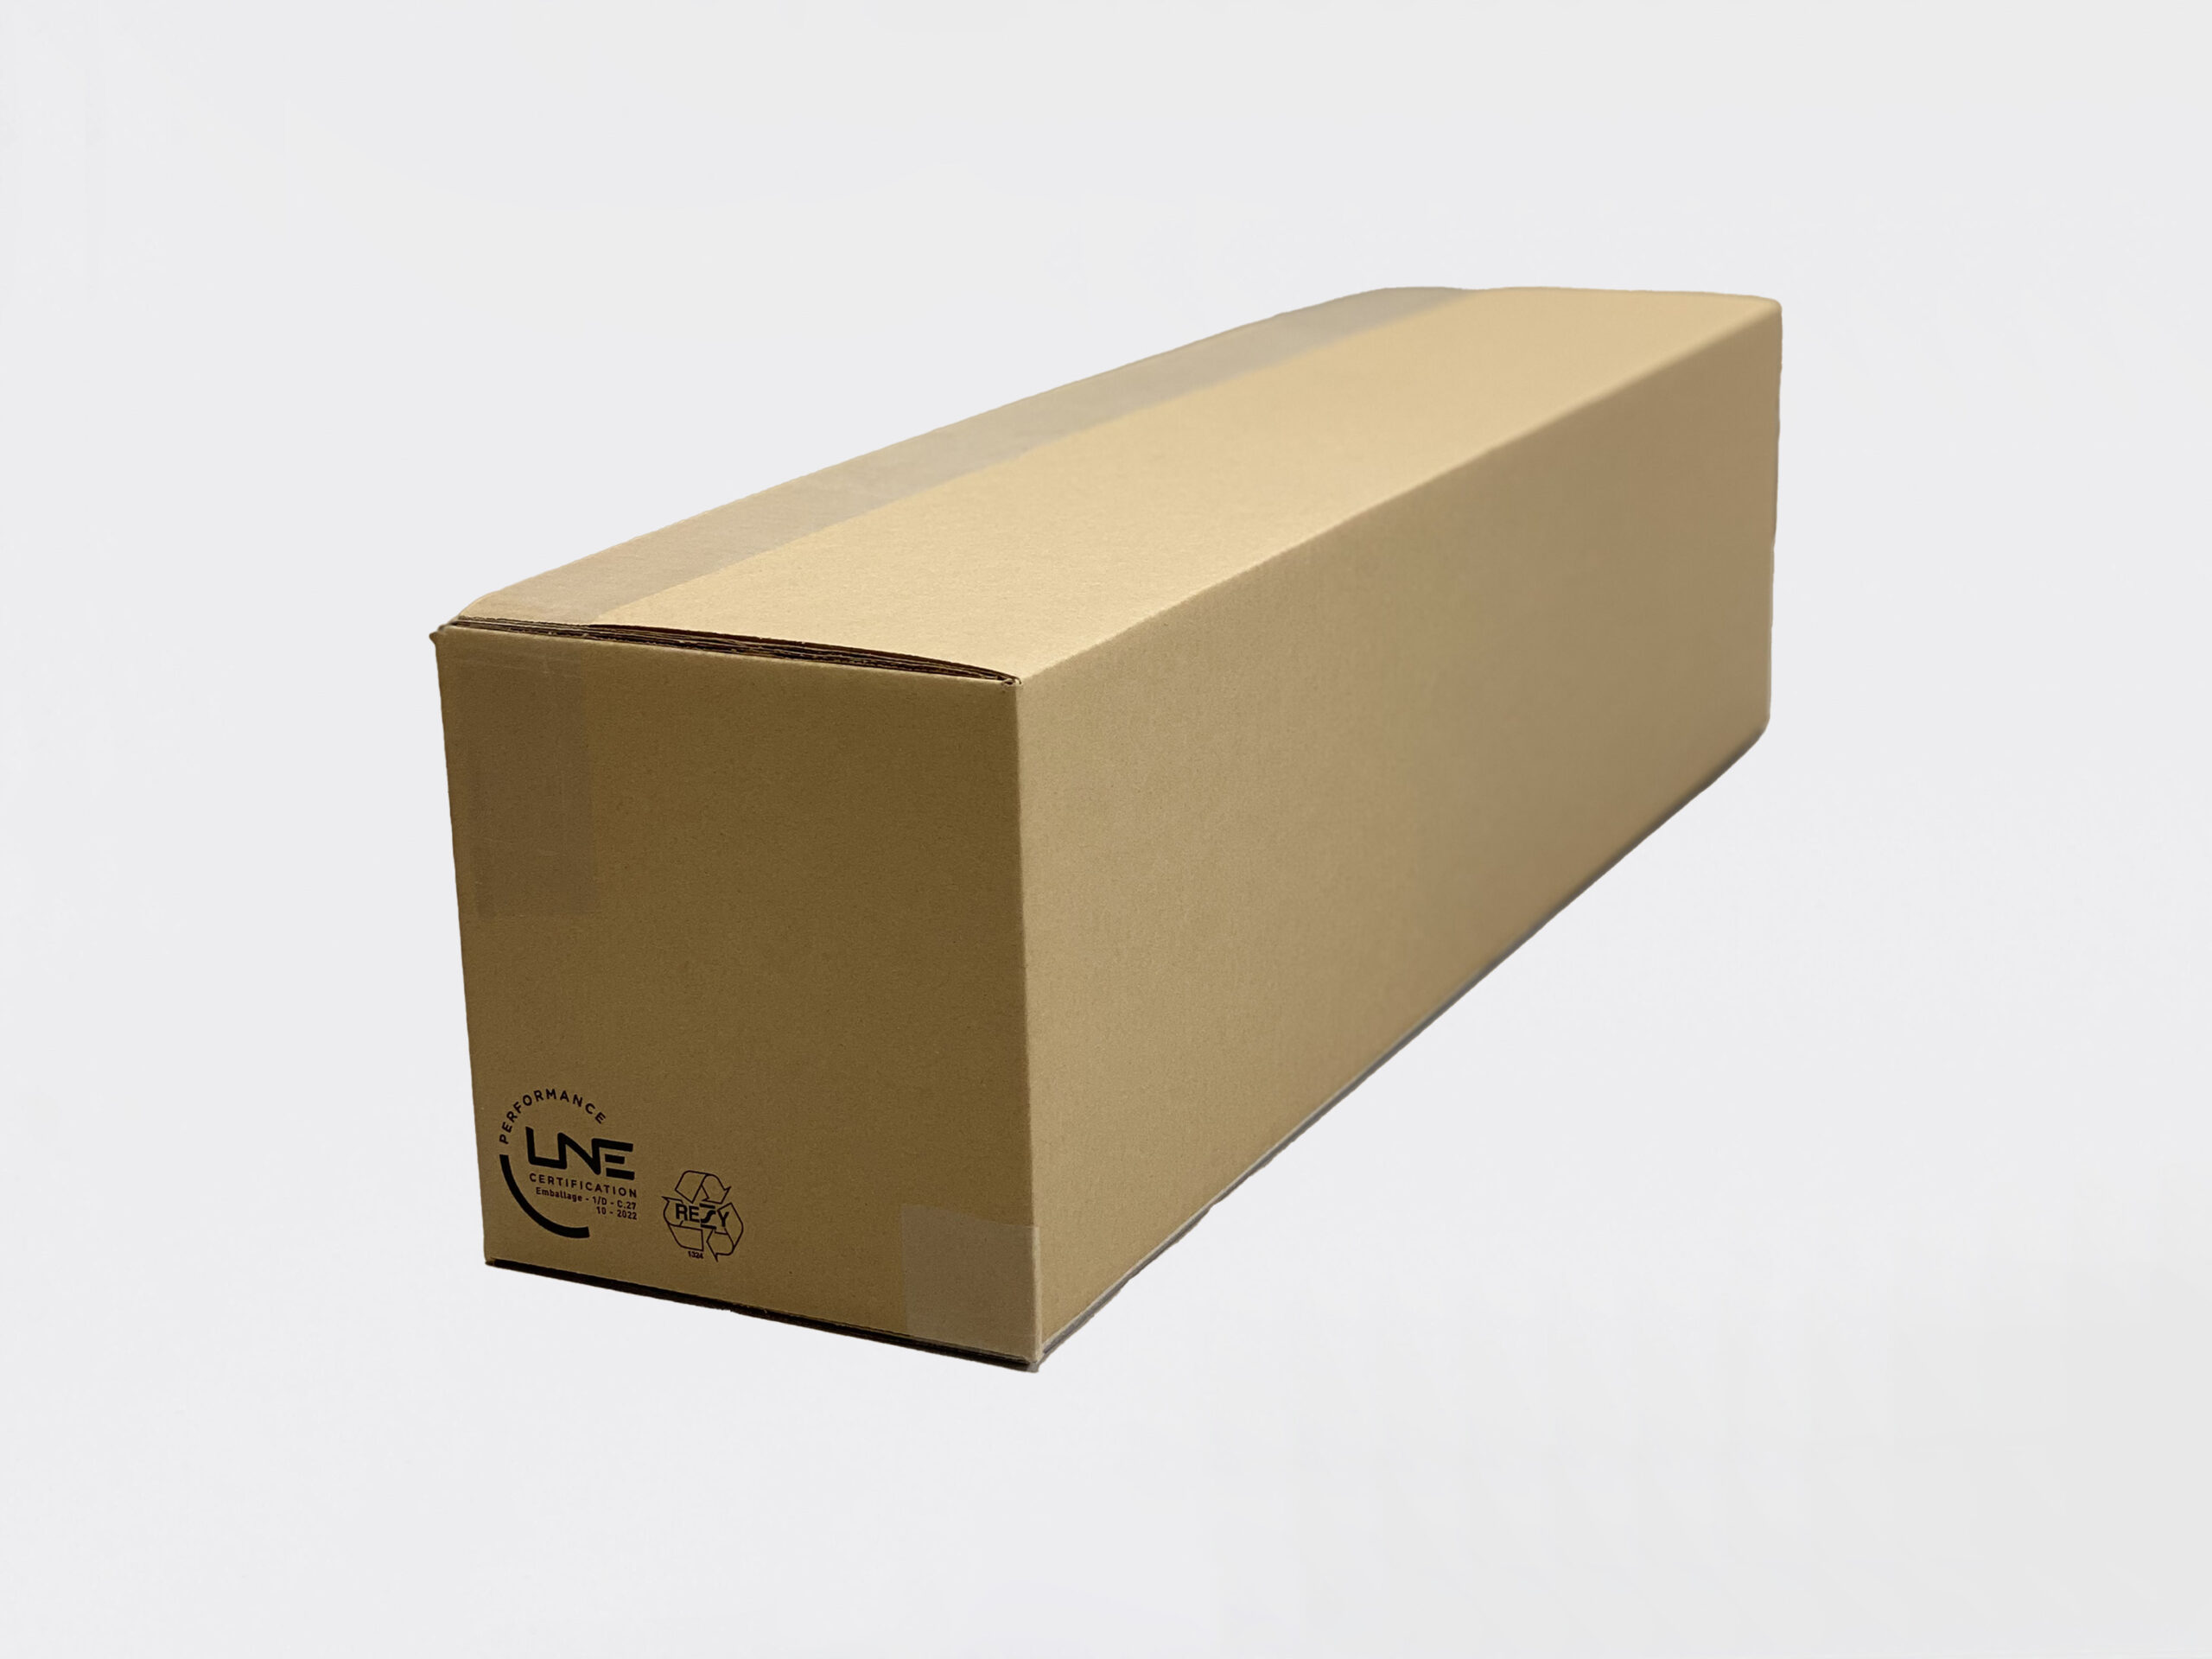 LZYKJGS Carton Emballage Colis, 320x229x76 mm Lot de 20, Boite en